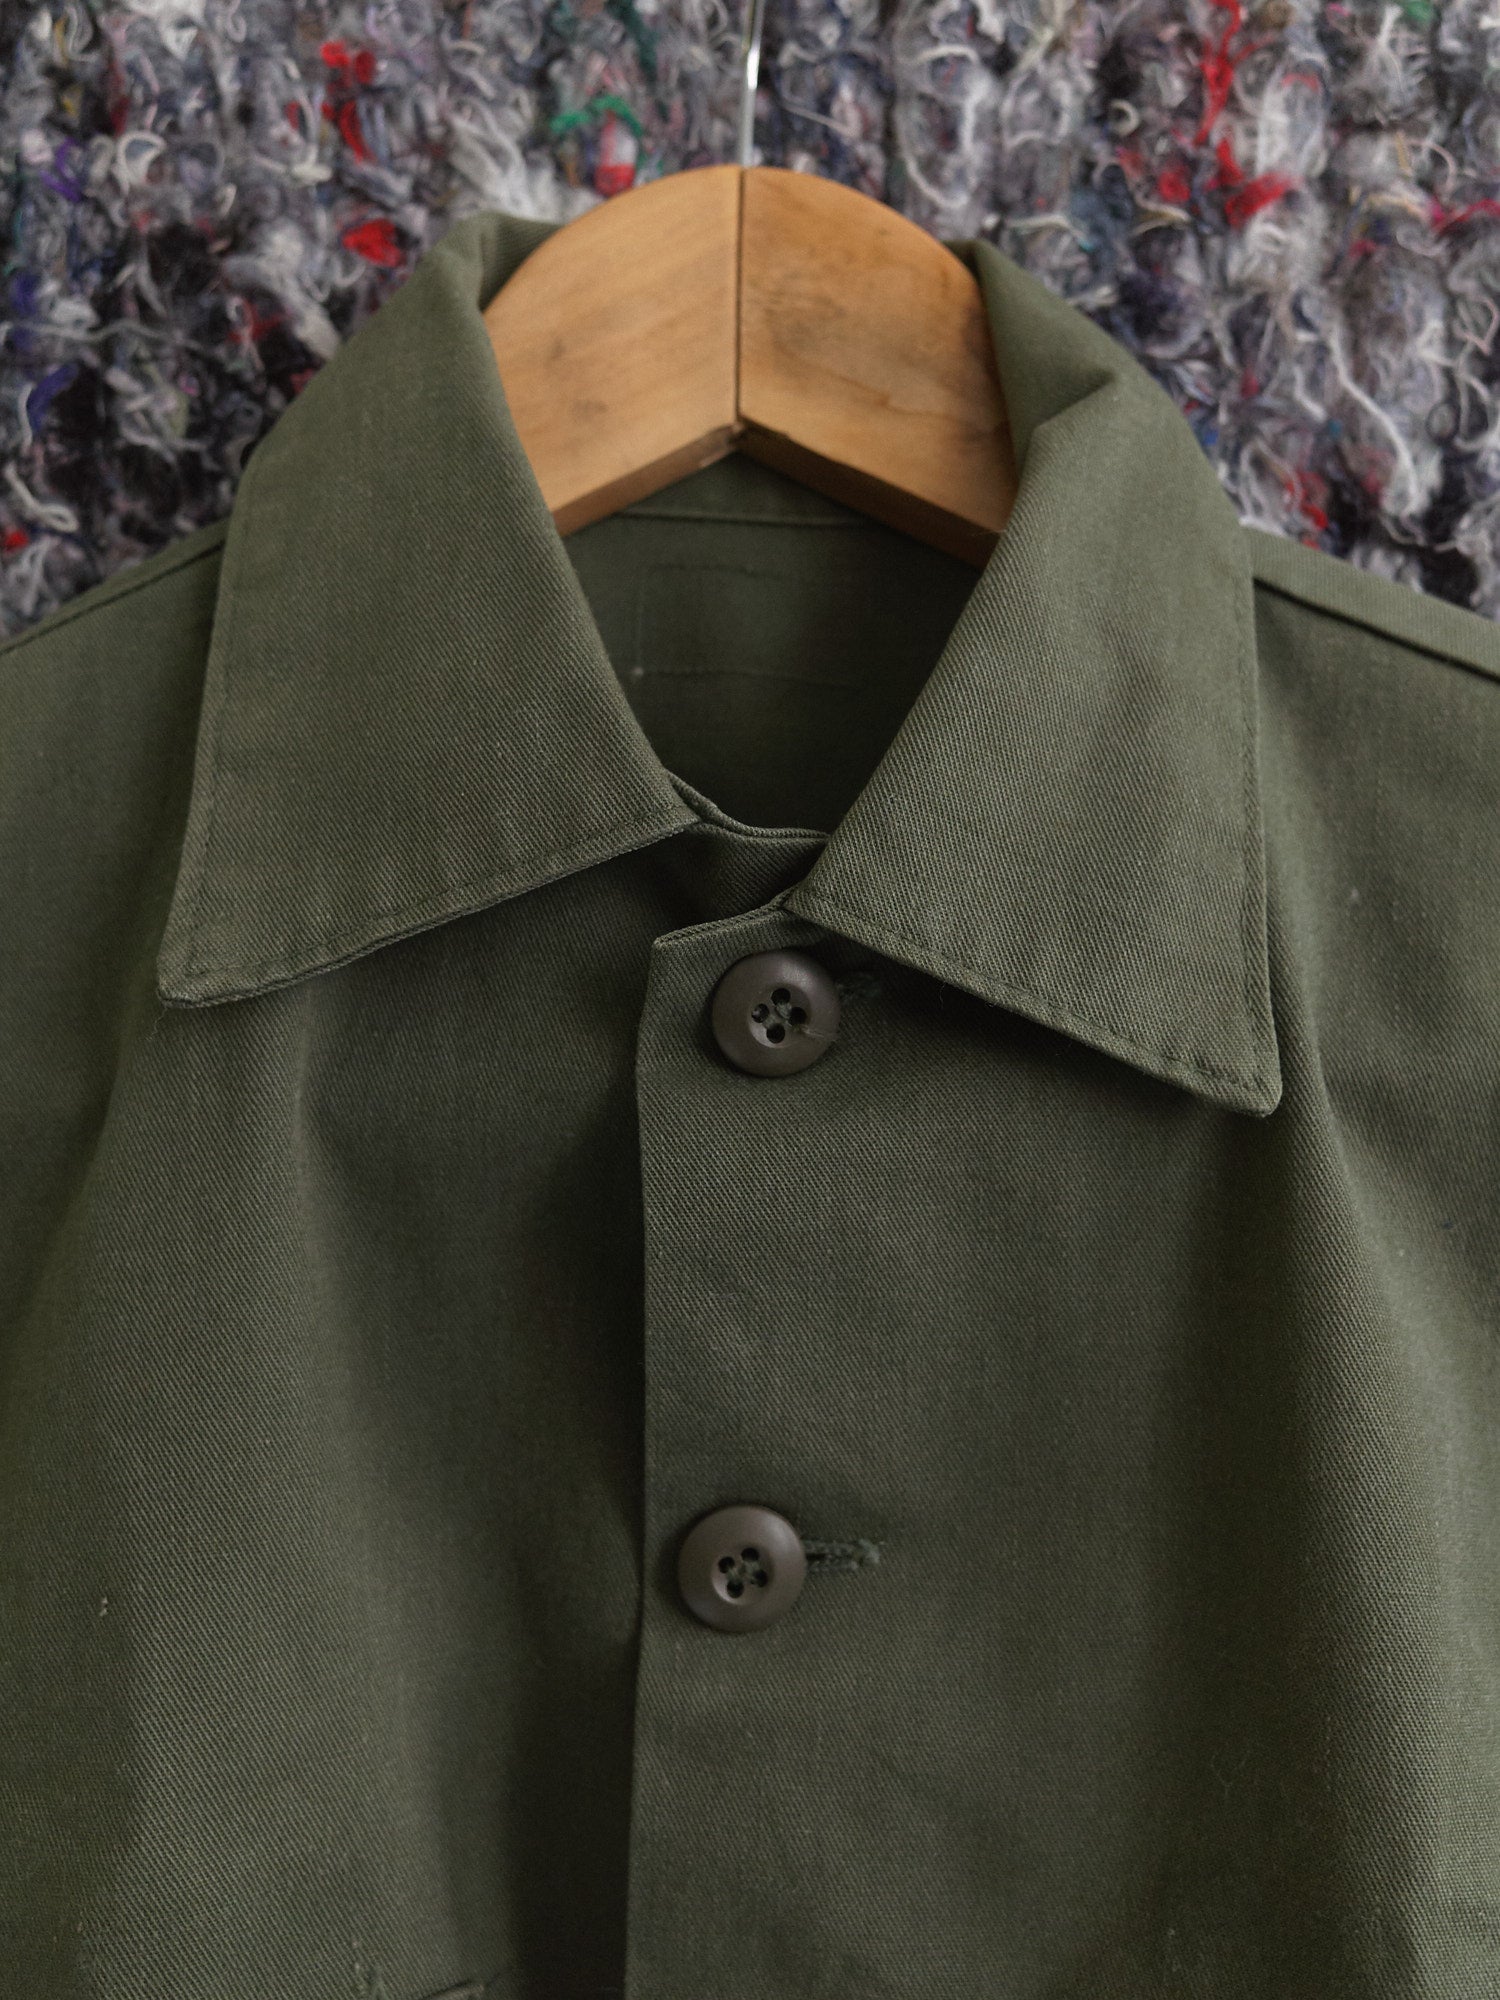 Vintage army surplus khaki poly cotton cut off hem short sleeve shirt - mens XS